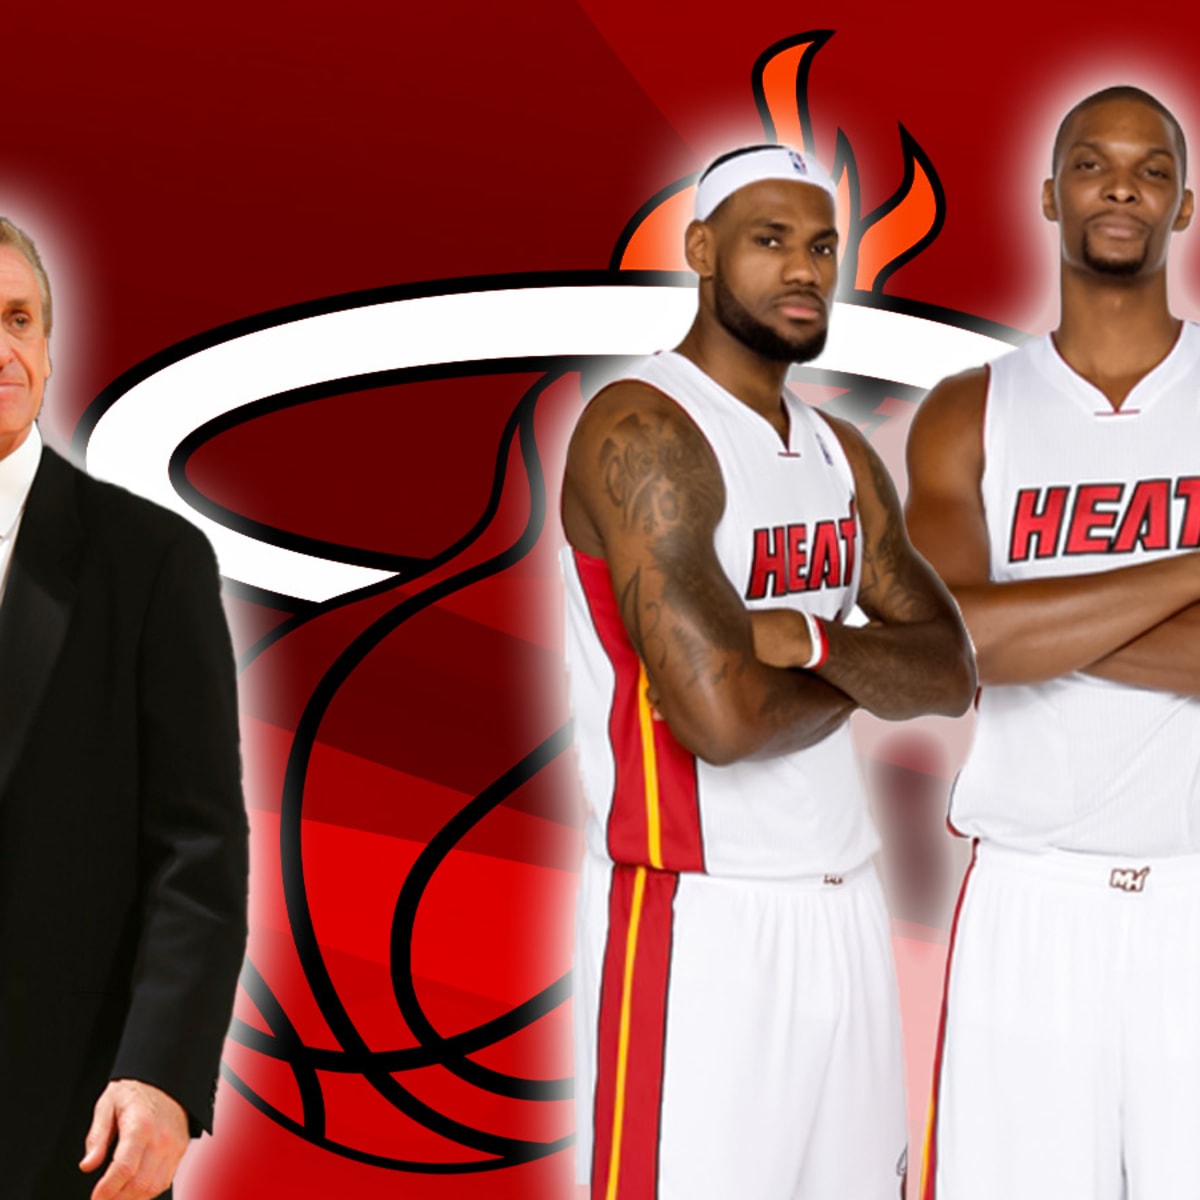 Miami Heat: When LeBron James, The King, speaks we all listen